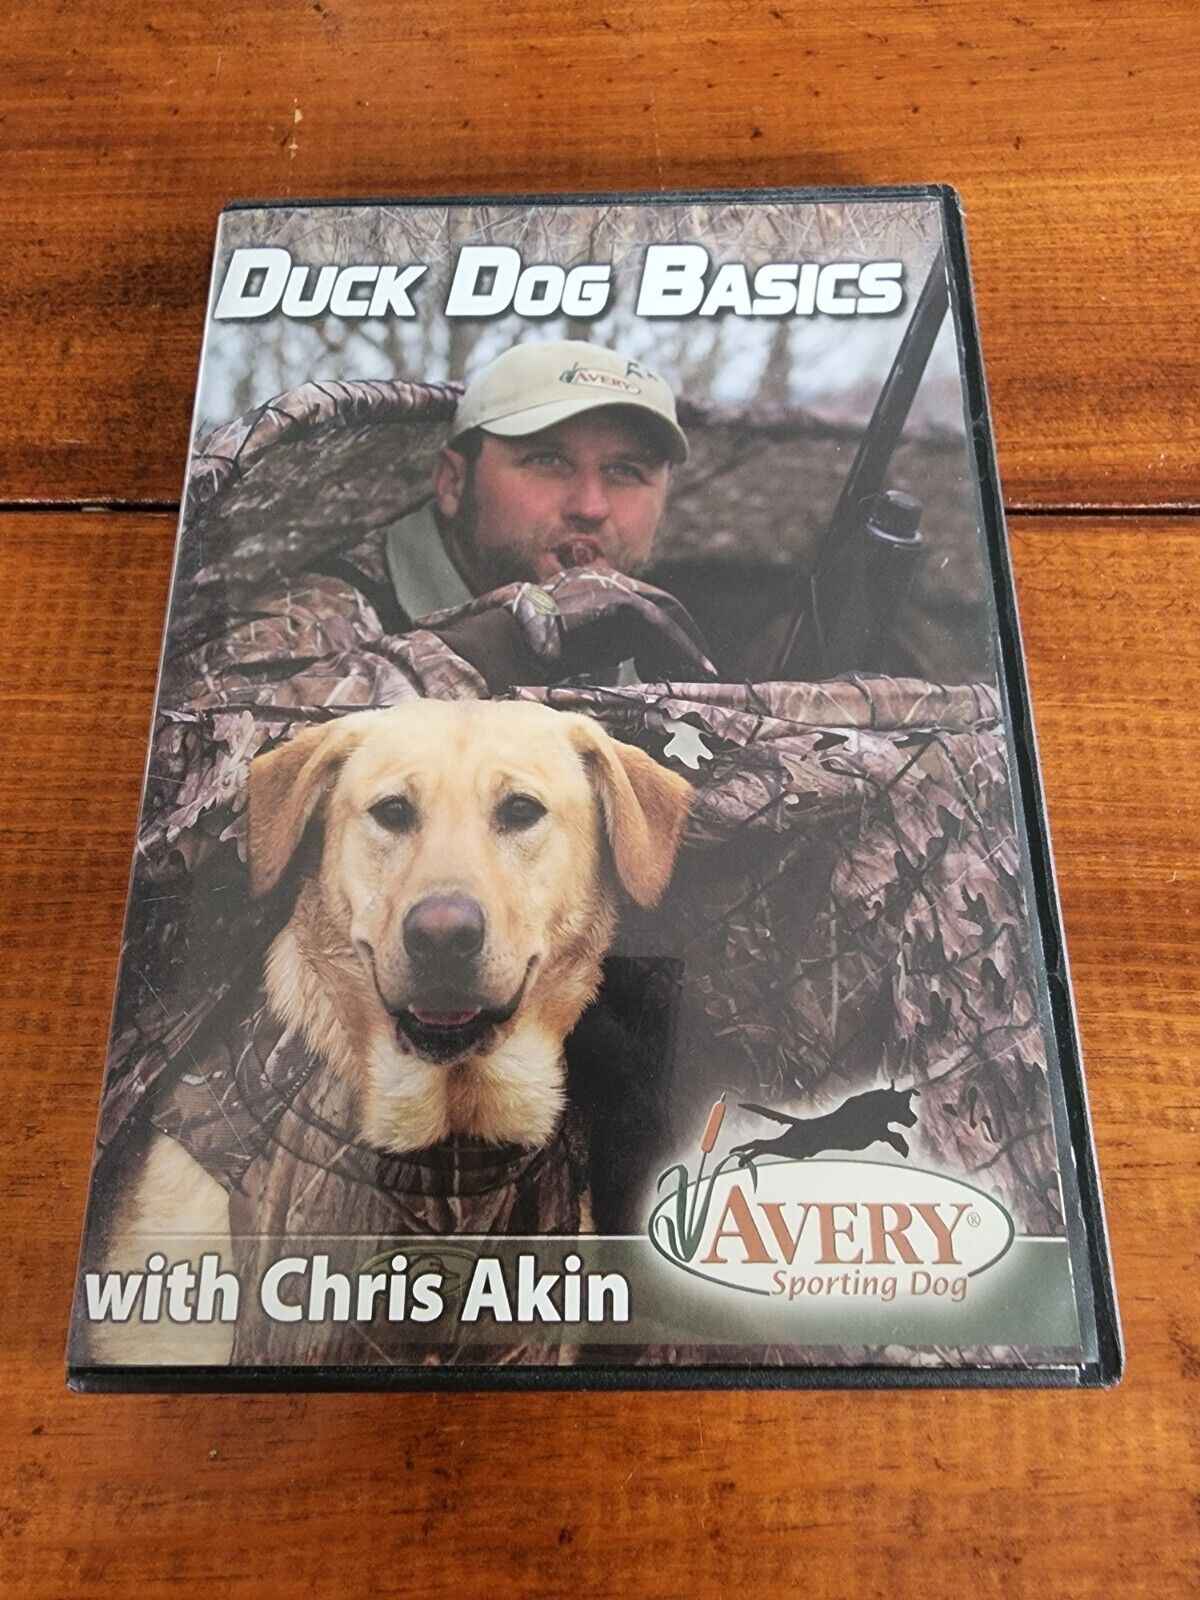  DUCK DOG BASICS RETRIEVER TRAINING DVD